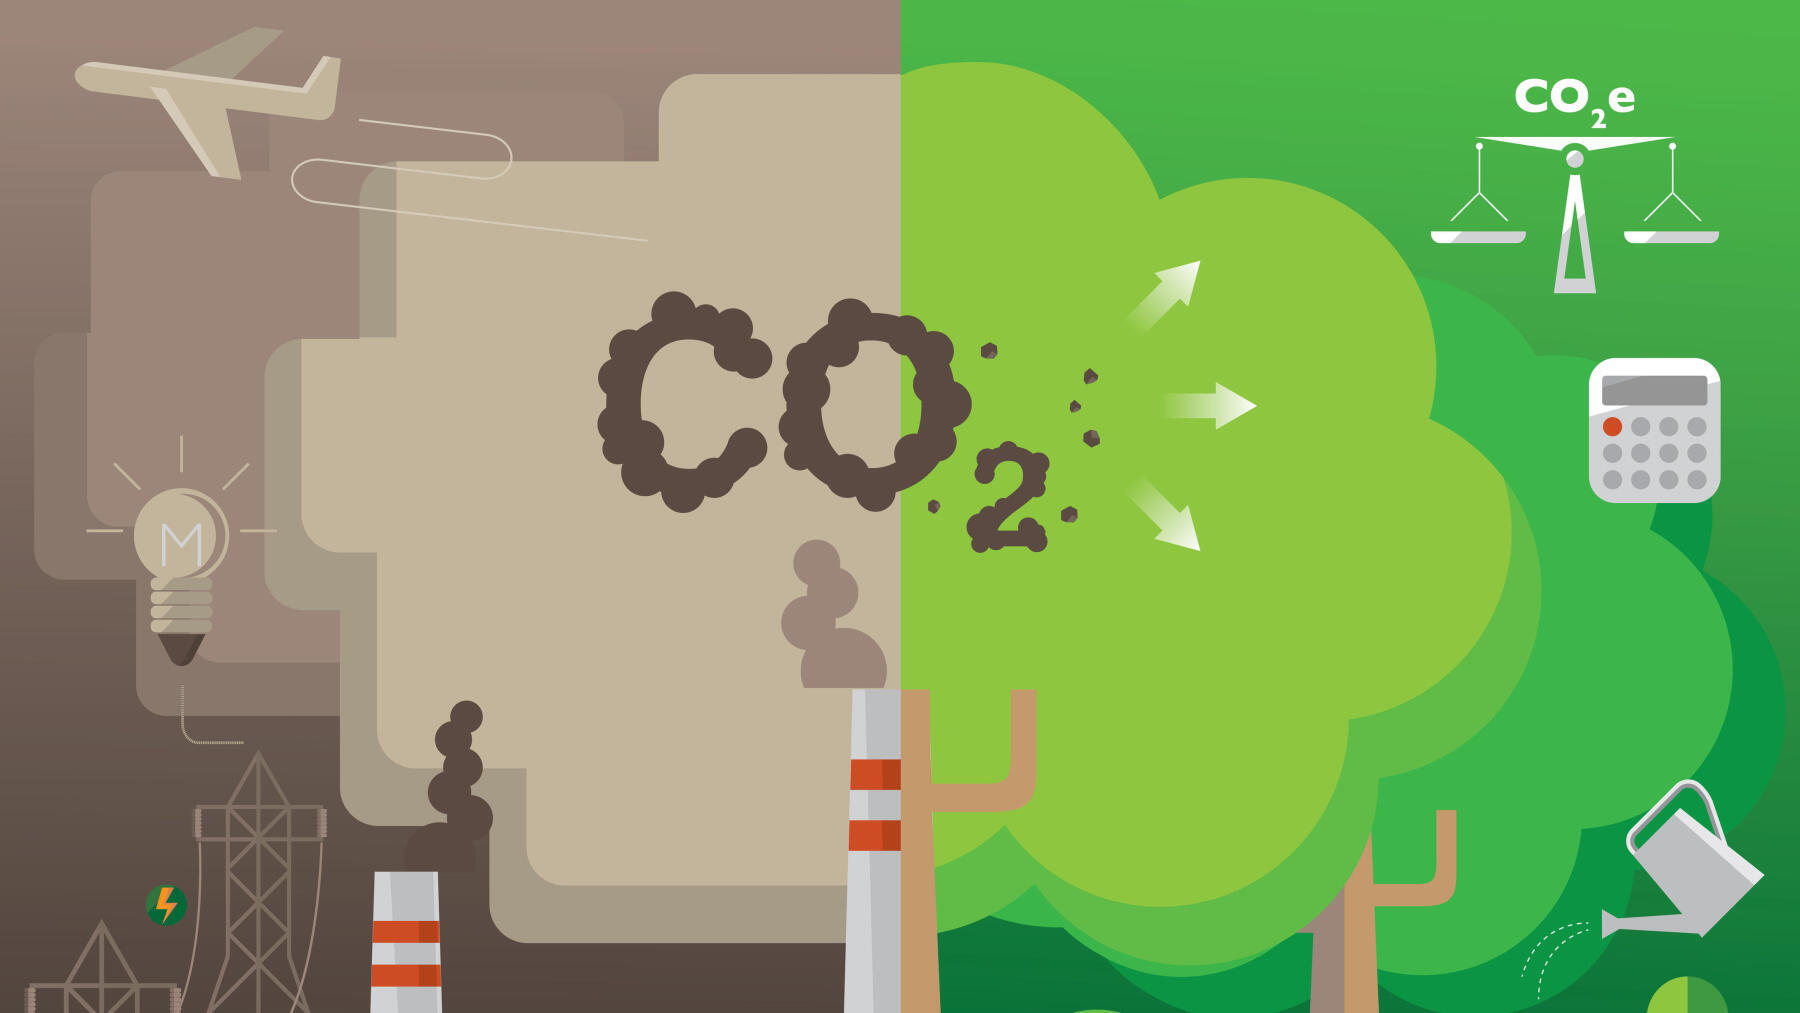 Illustration of the CO2 emissions